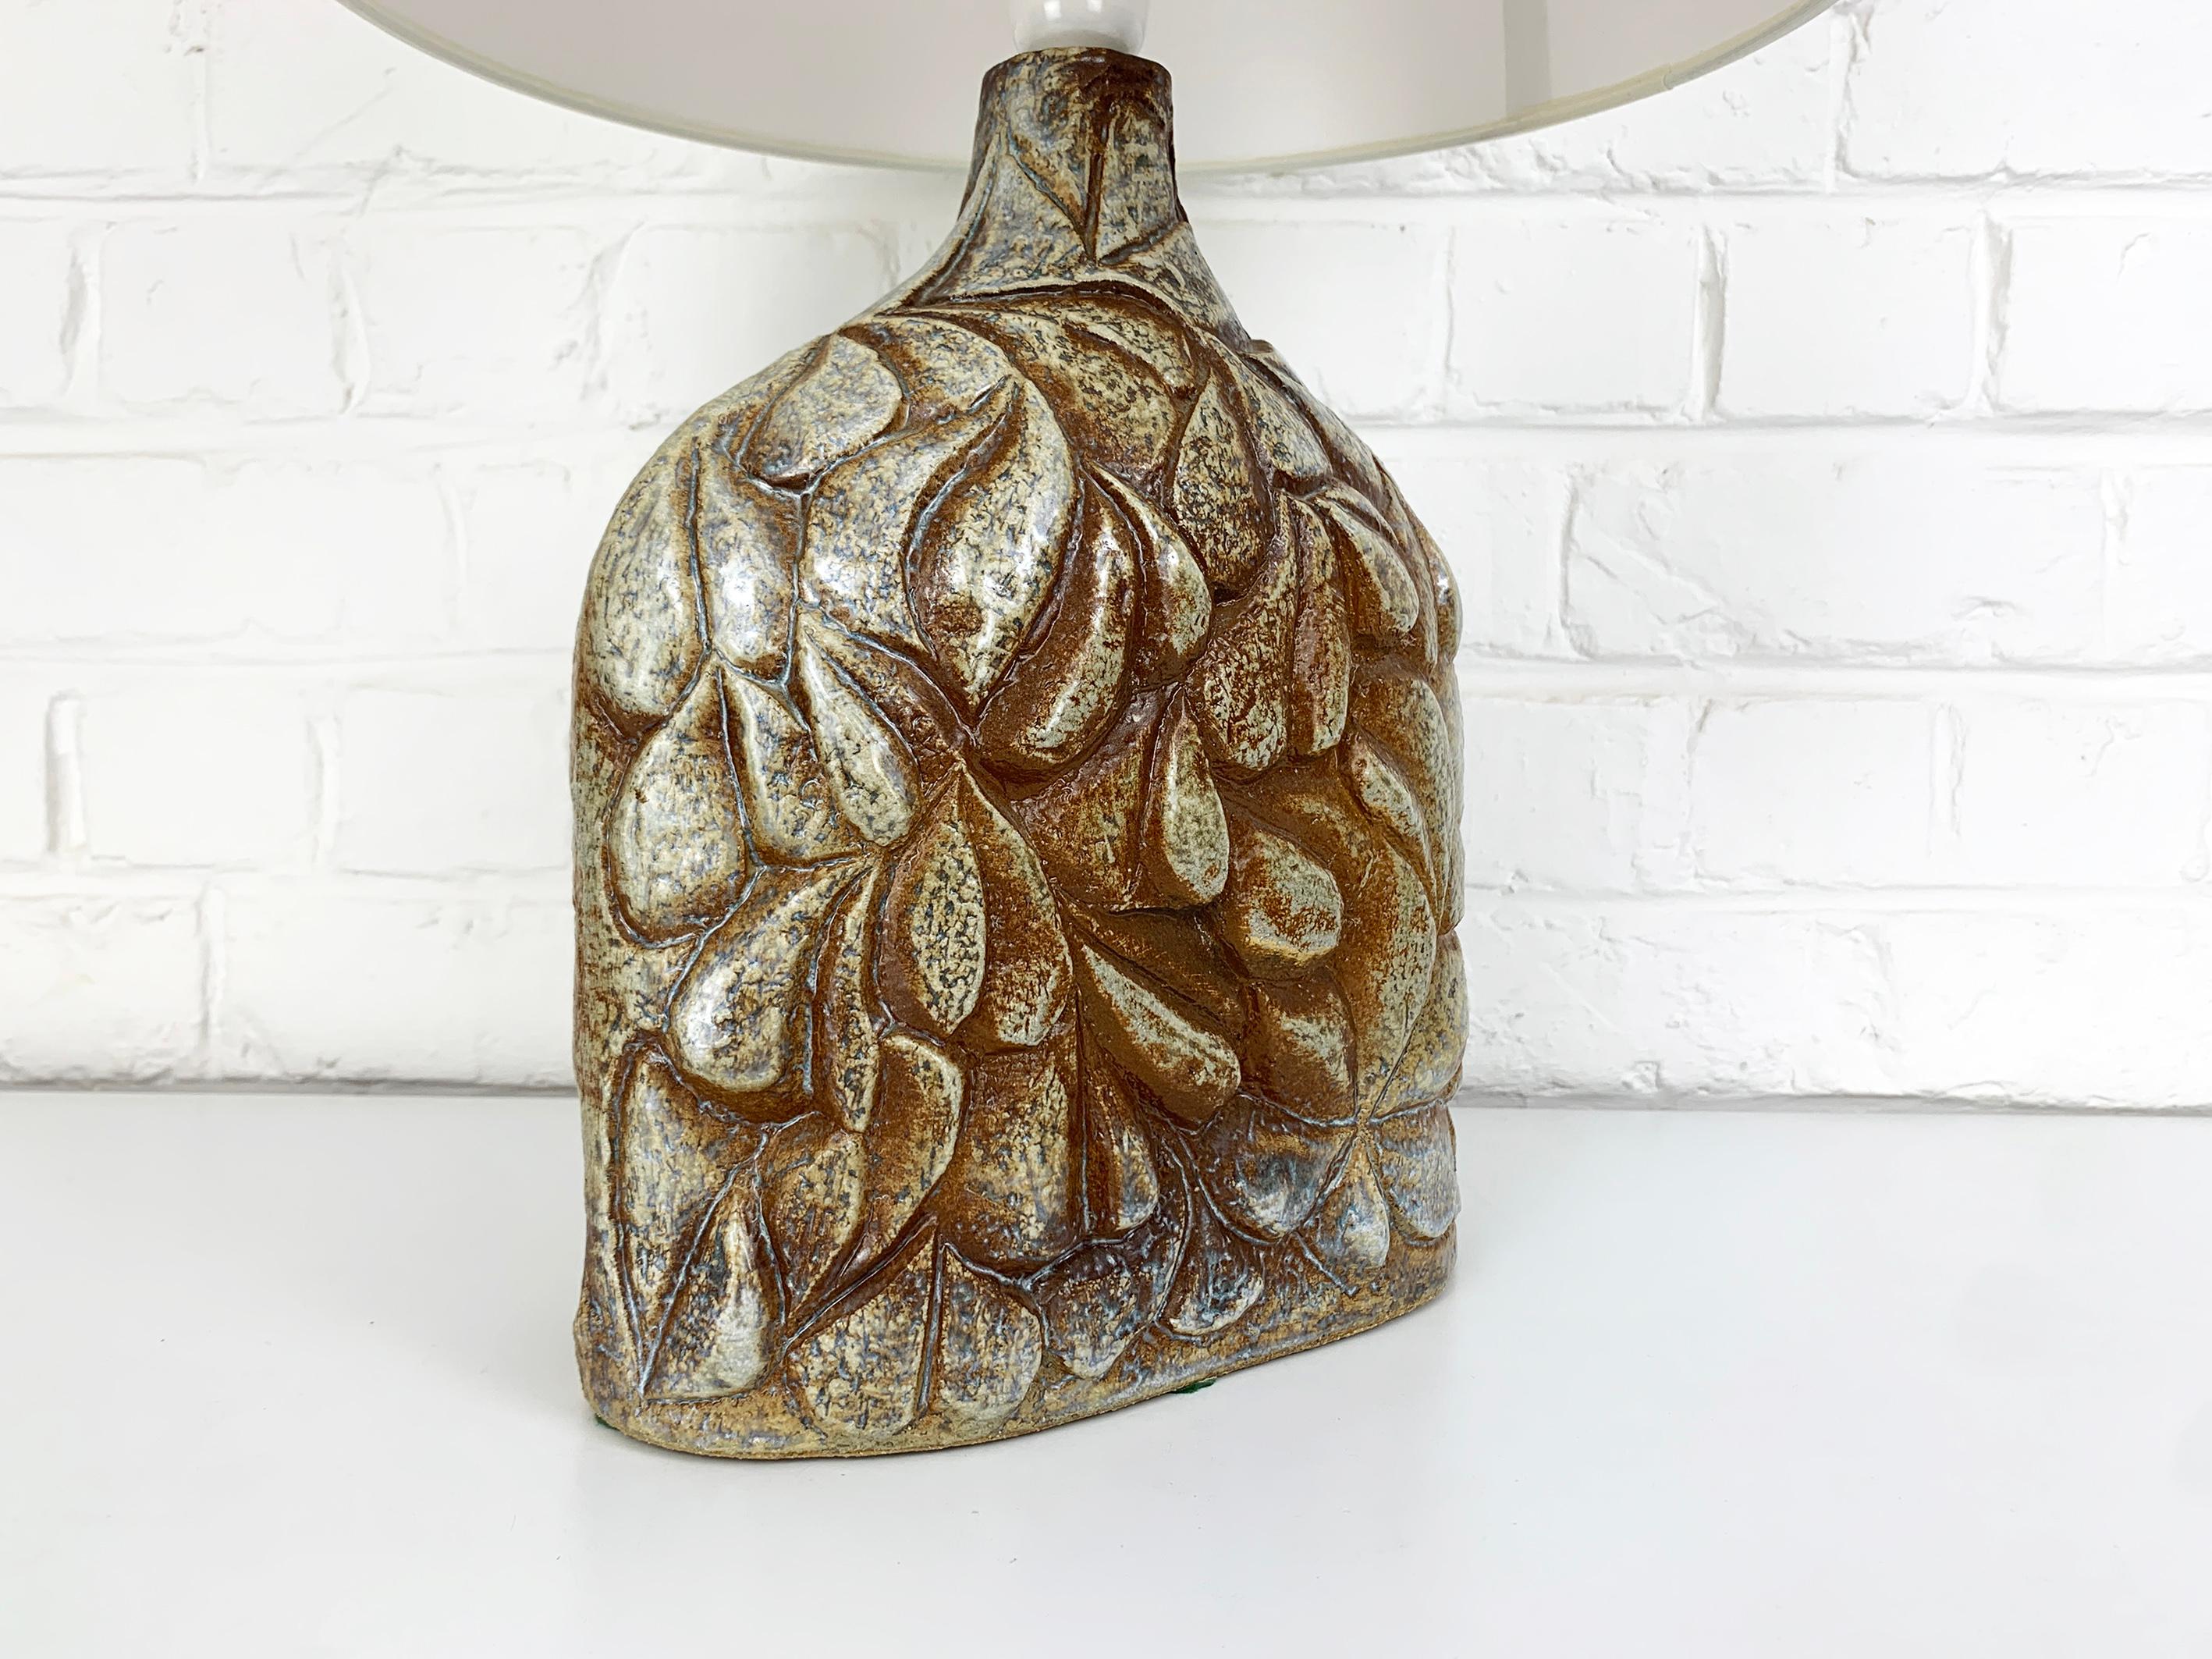 20th Century Danish Søholm Stentøj ceramic table lamp, glazed stoneware design Haico Nitzsche For Sale